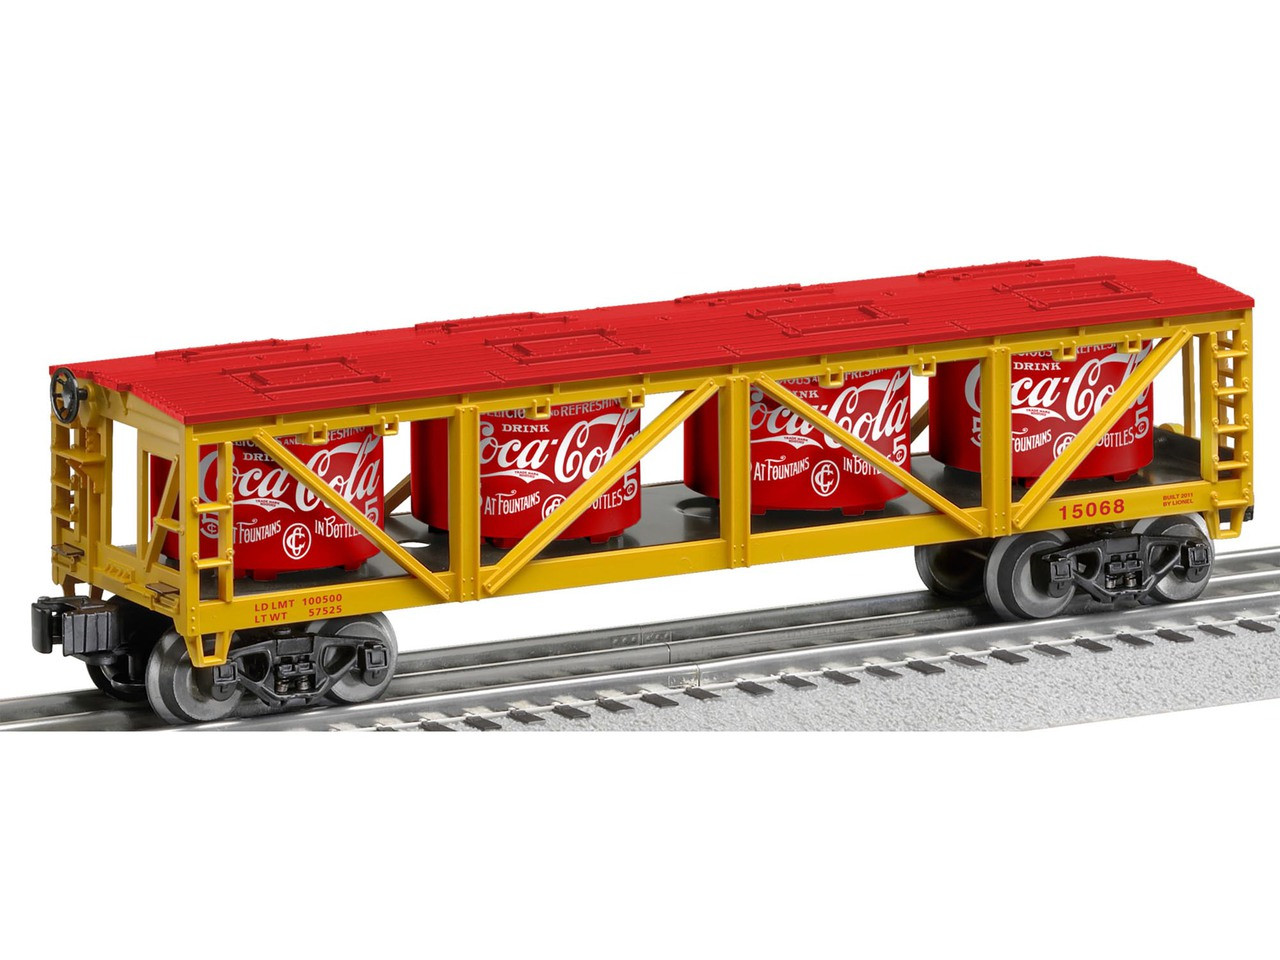 o model trains